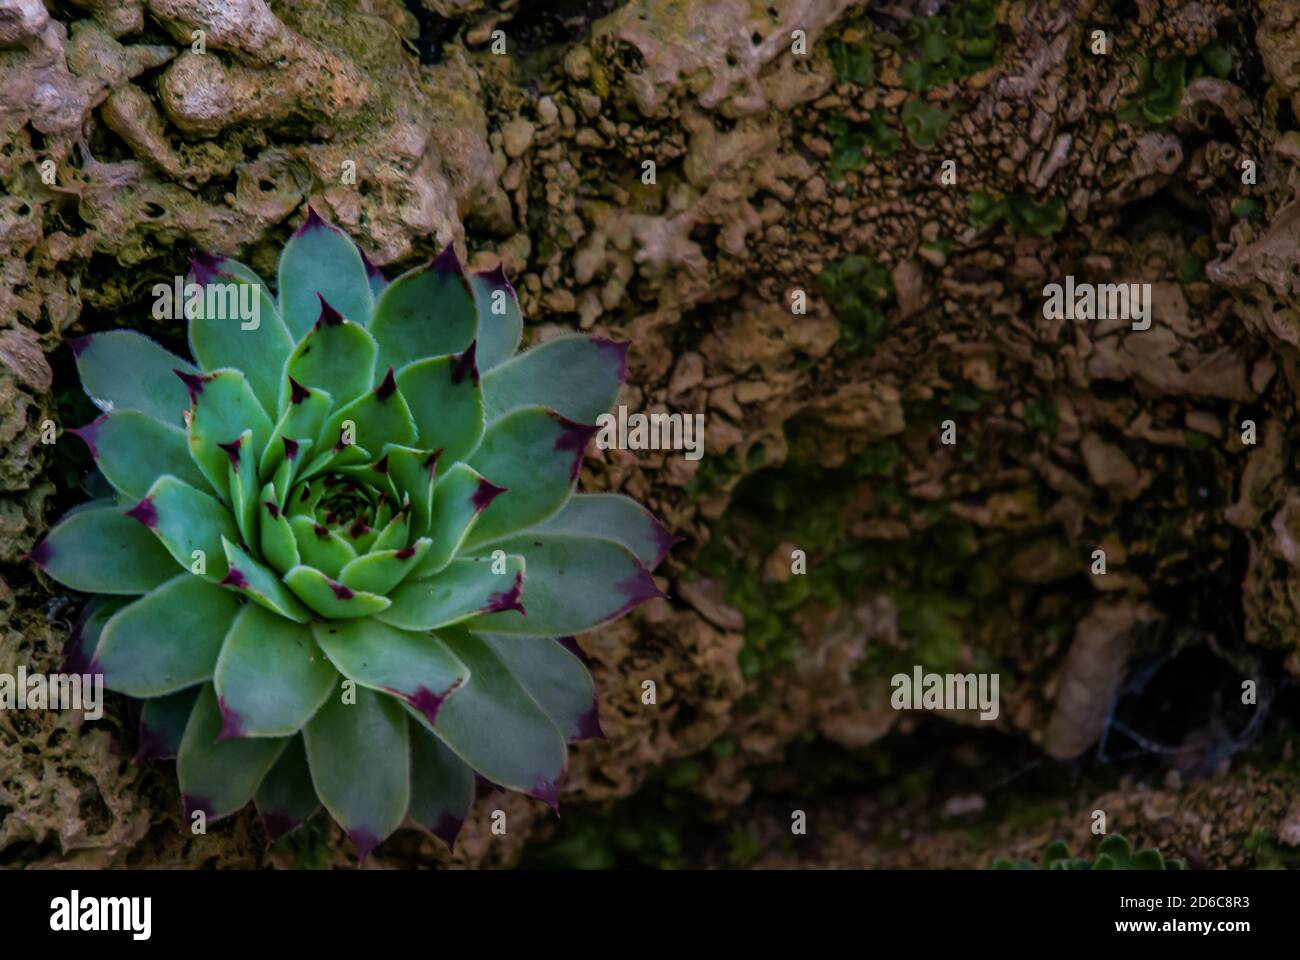 Sempervivum tectorum, Common Houseleek, Perennial plant growing in a botanic garden. No focus, specifically. Stock Photo